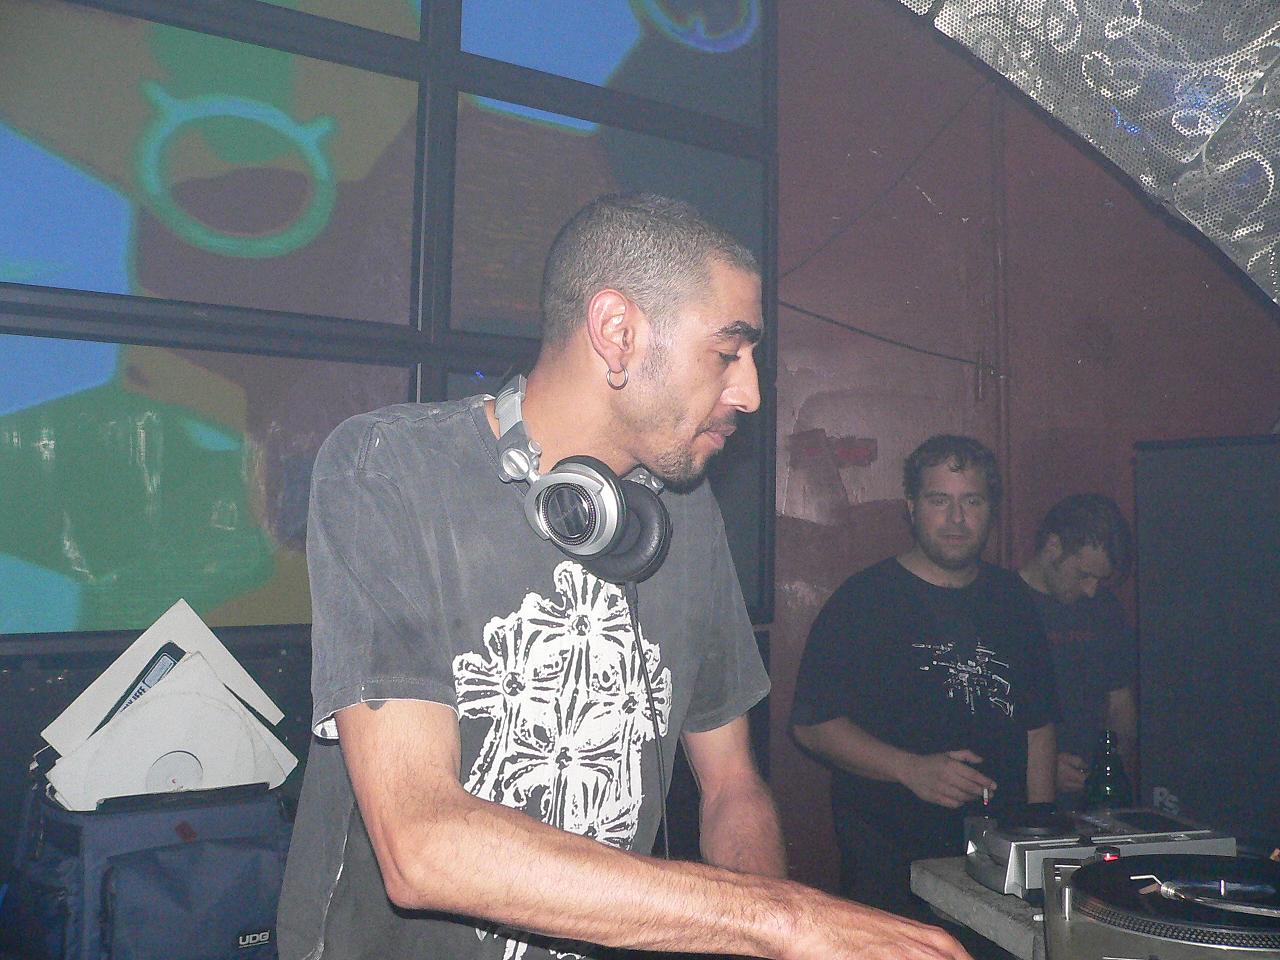 a man wearing headphones at an event